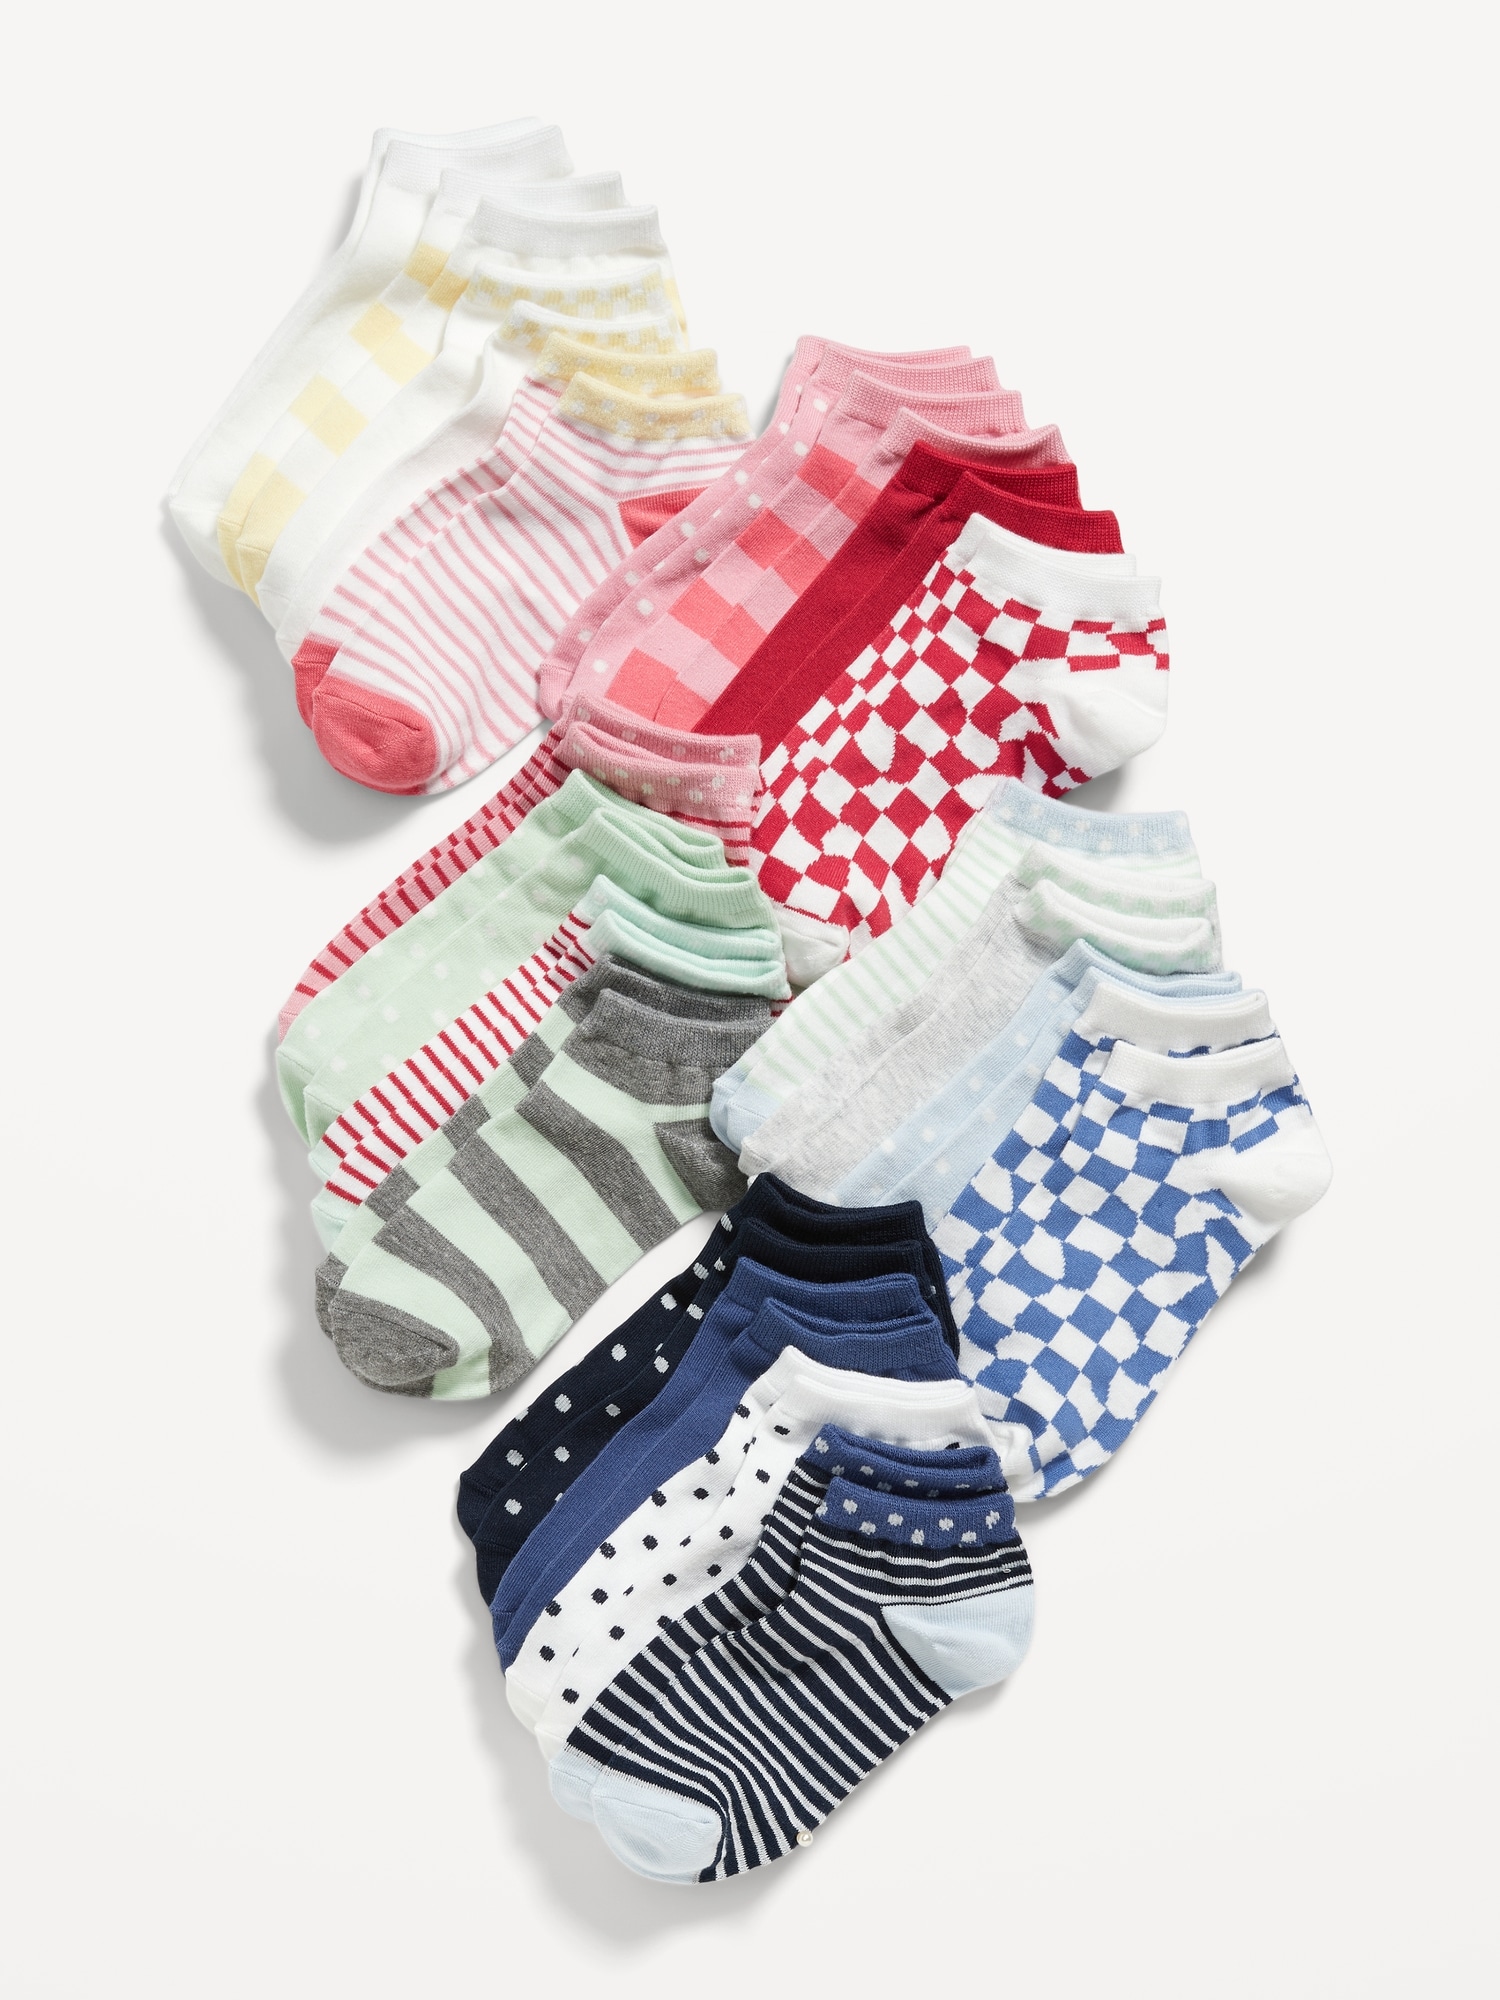 Old Navy Ankle Socks 20-Pack for Girls pink. 1